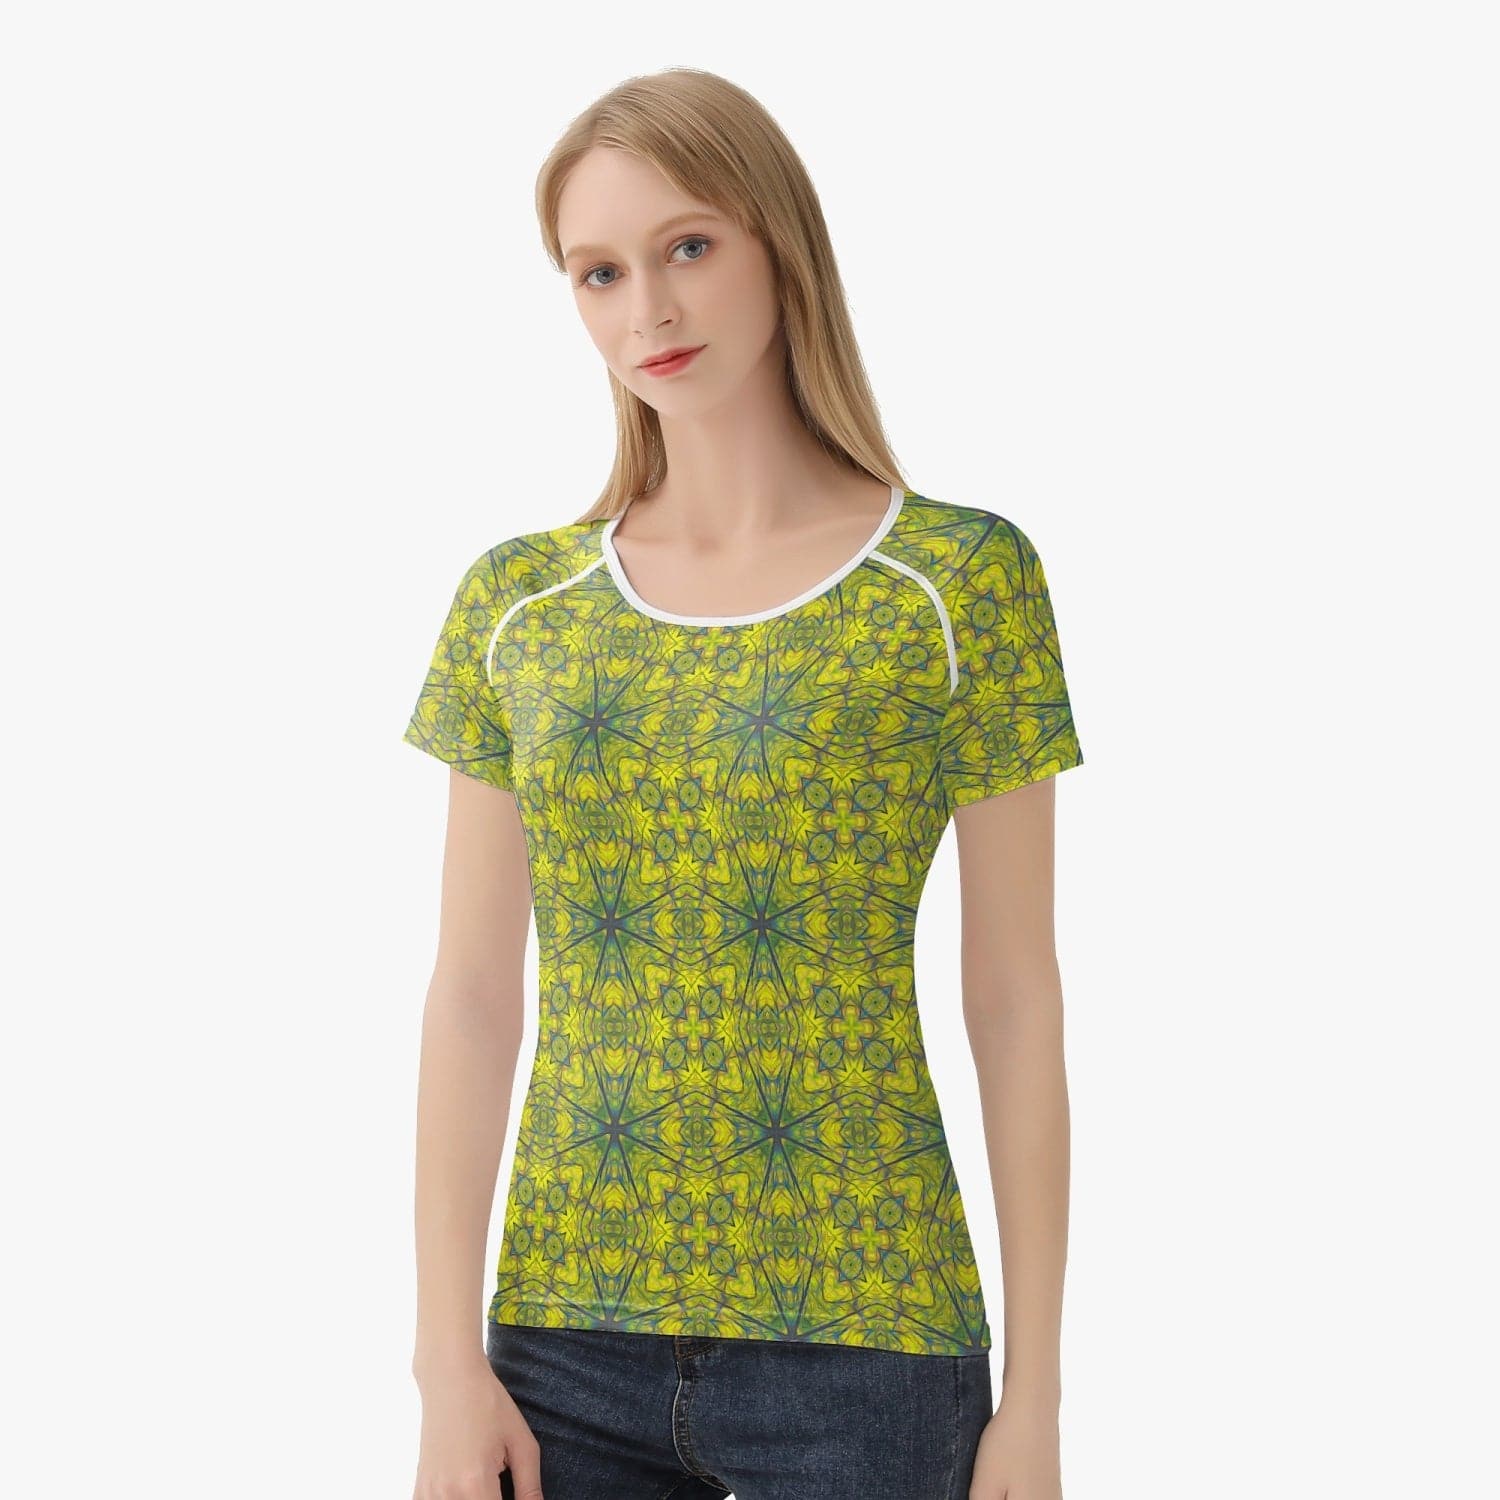 Green Hart chacra Handmade Yoga Top for Women sports T-shirt, by Sensus Studio Design